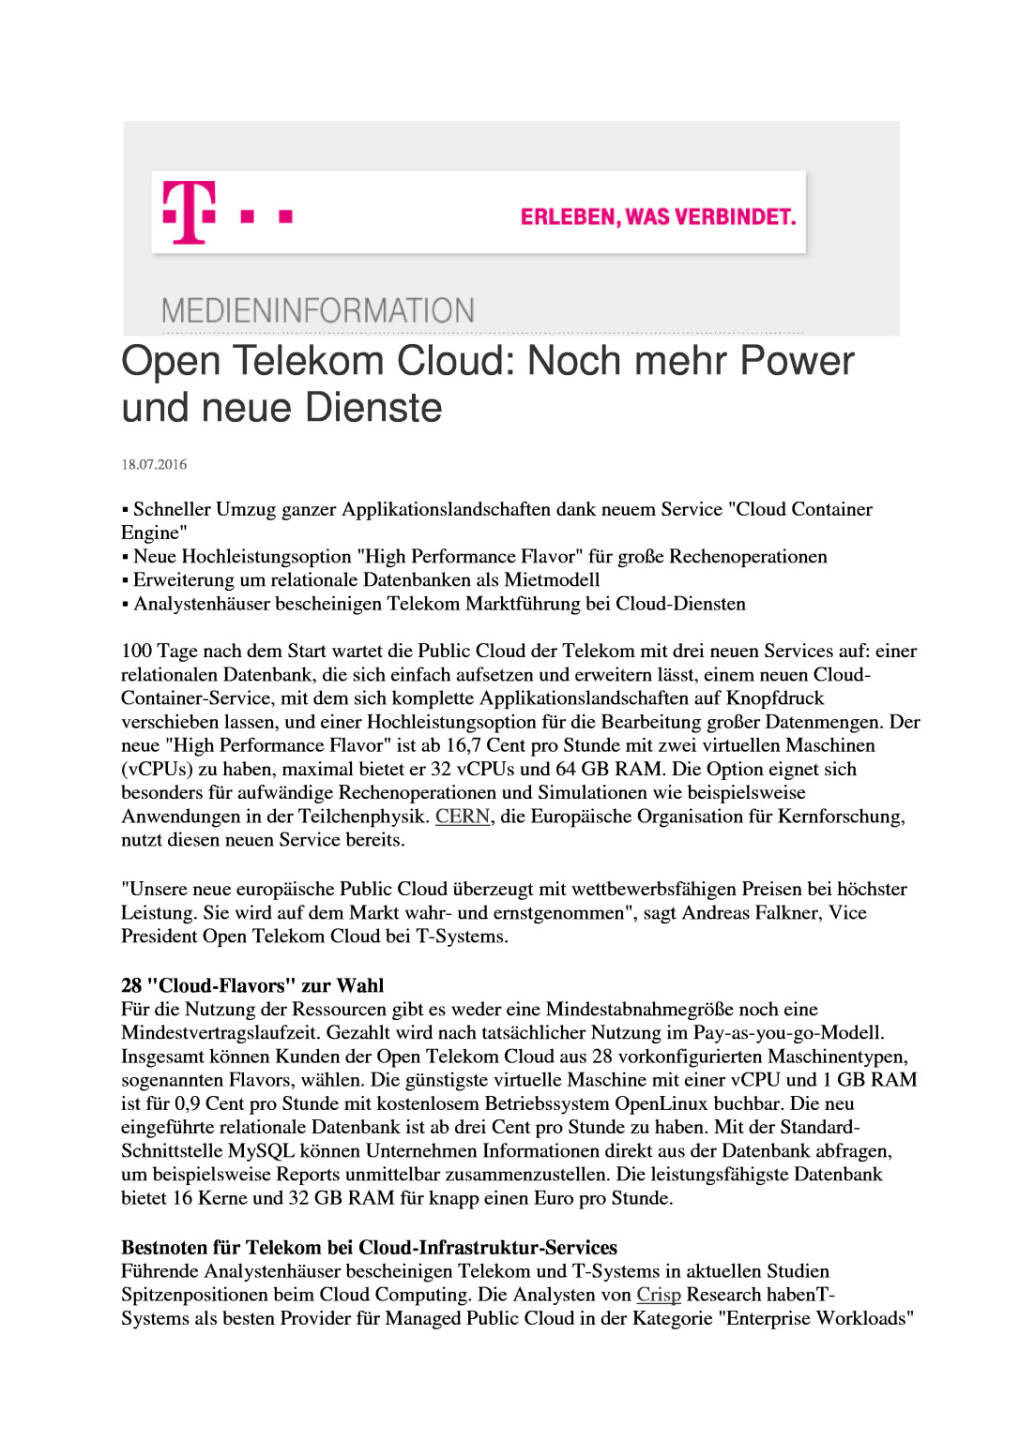 Deutsche Telekom: Open Telekom Cloud, Seite 1/2, komplettes Dokument unter http://boerse-social.com/static/uploads/file_1435_deutsche_telekom_open_telekom_cloud.pdf